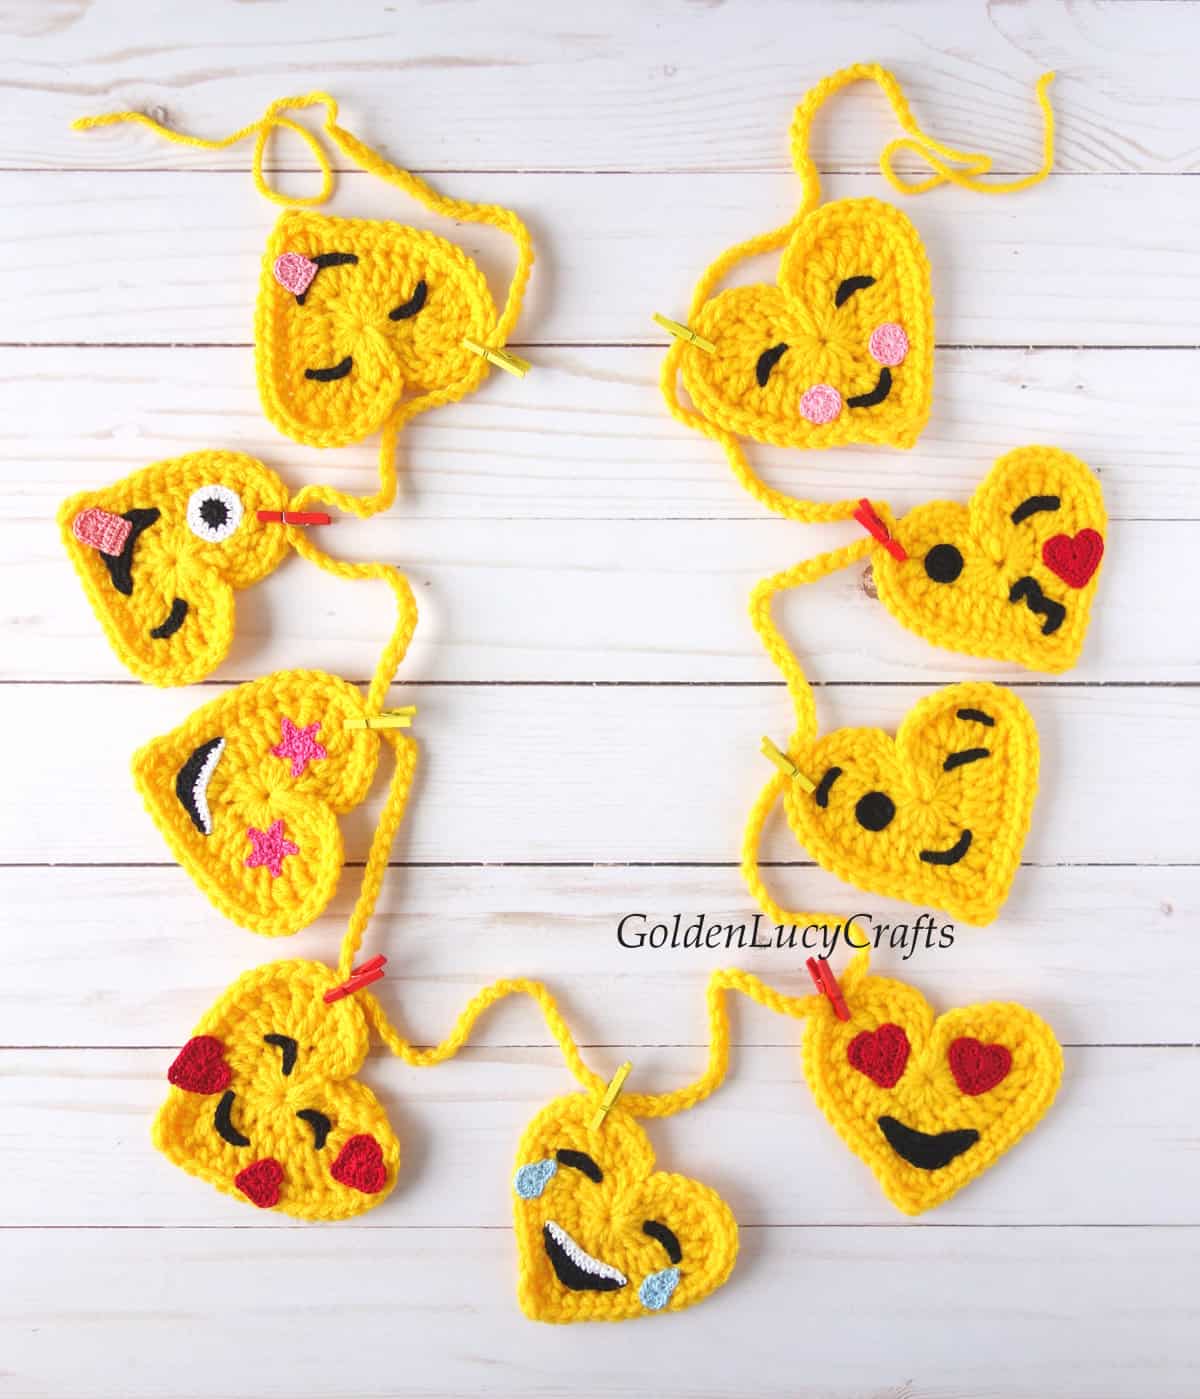 Handmade garland made from crocheted heart-shaped emojis.